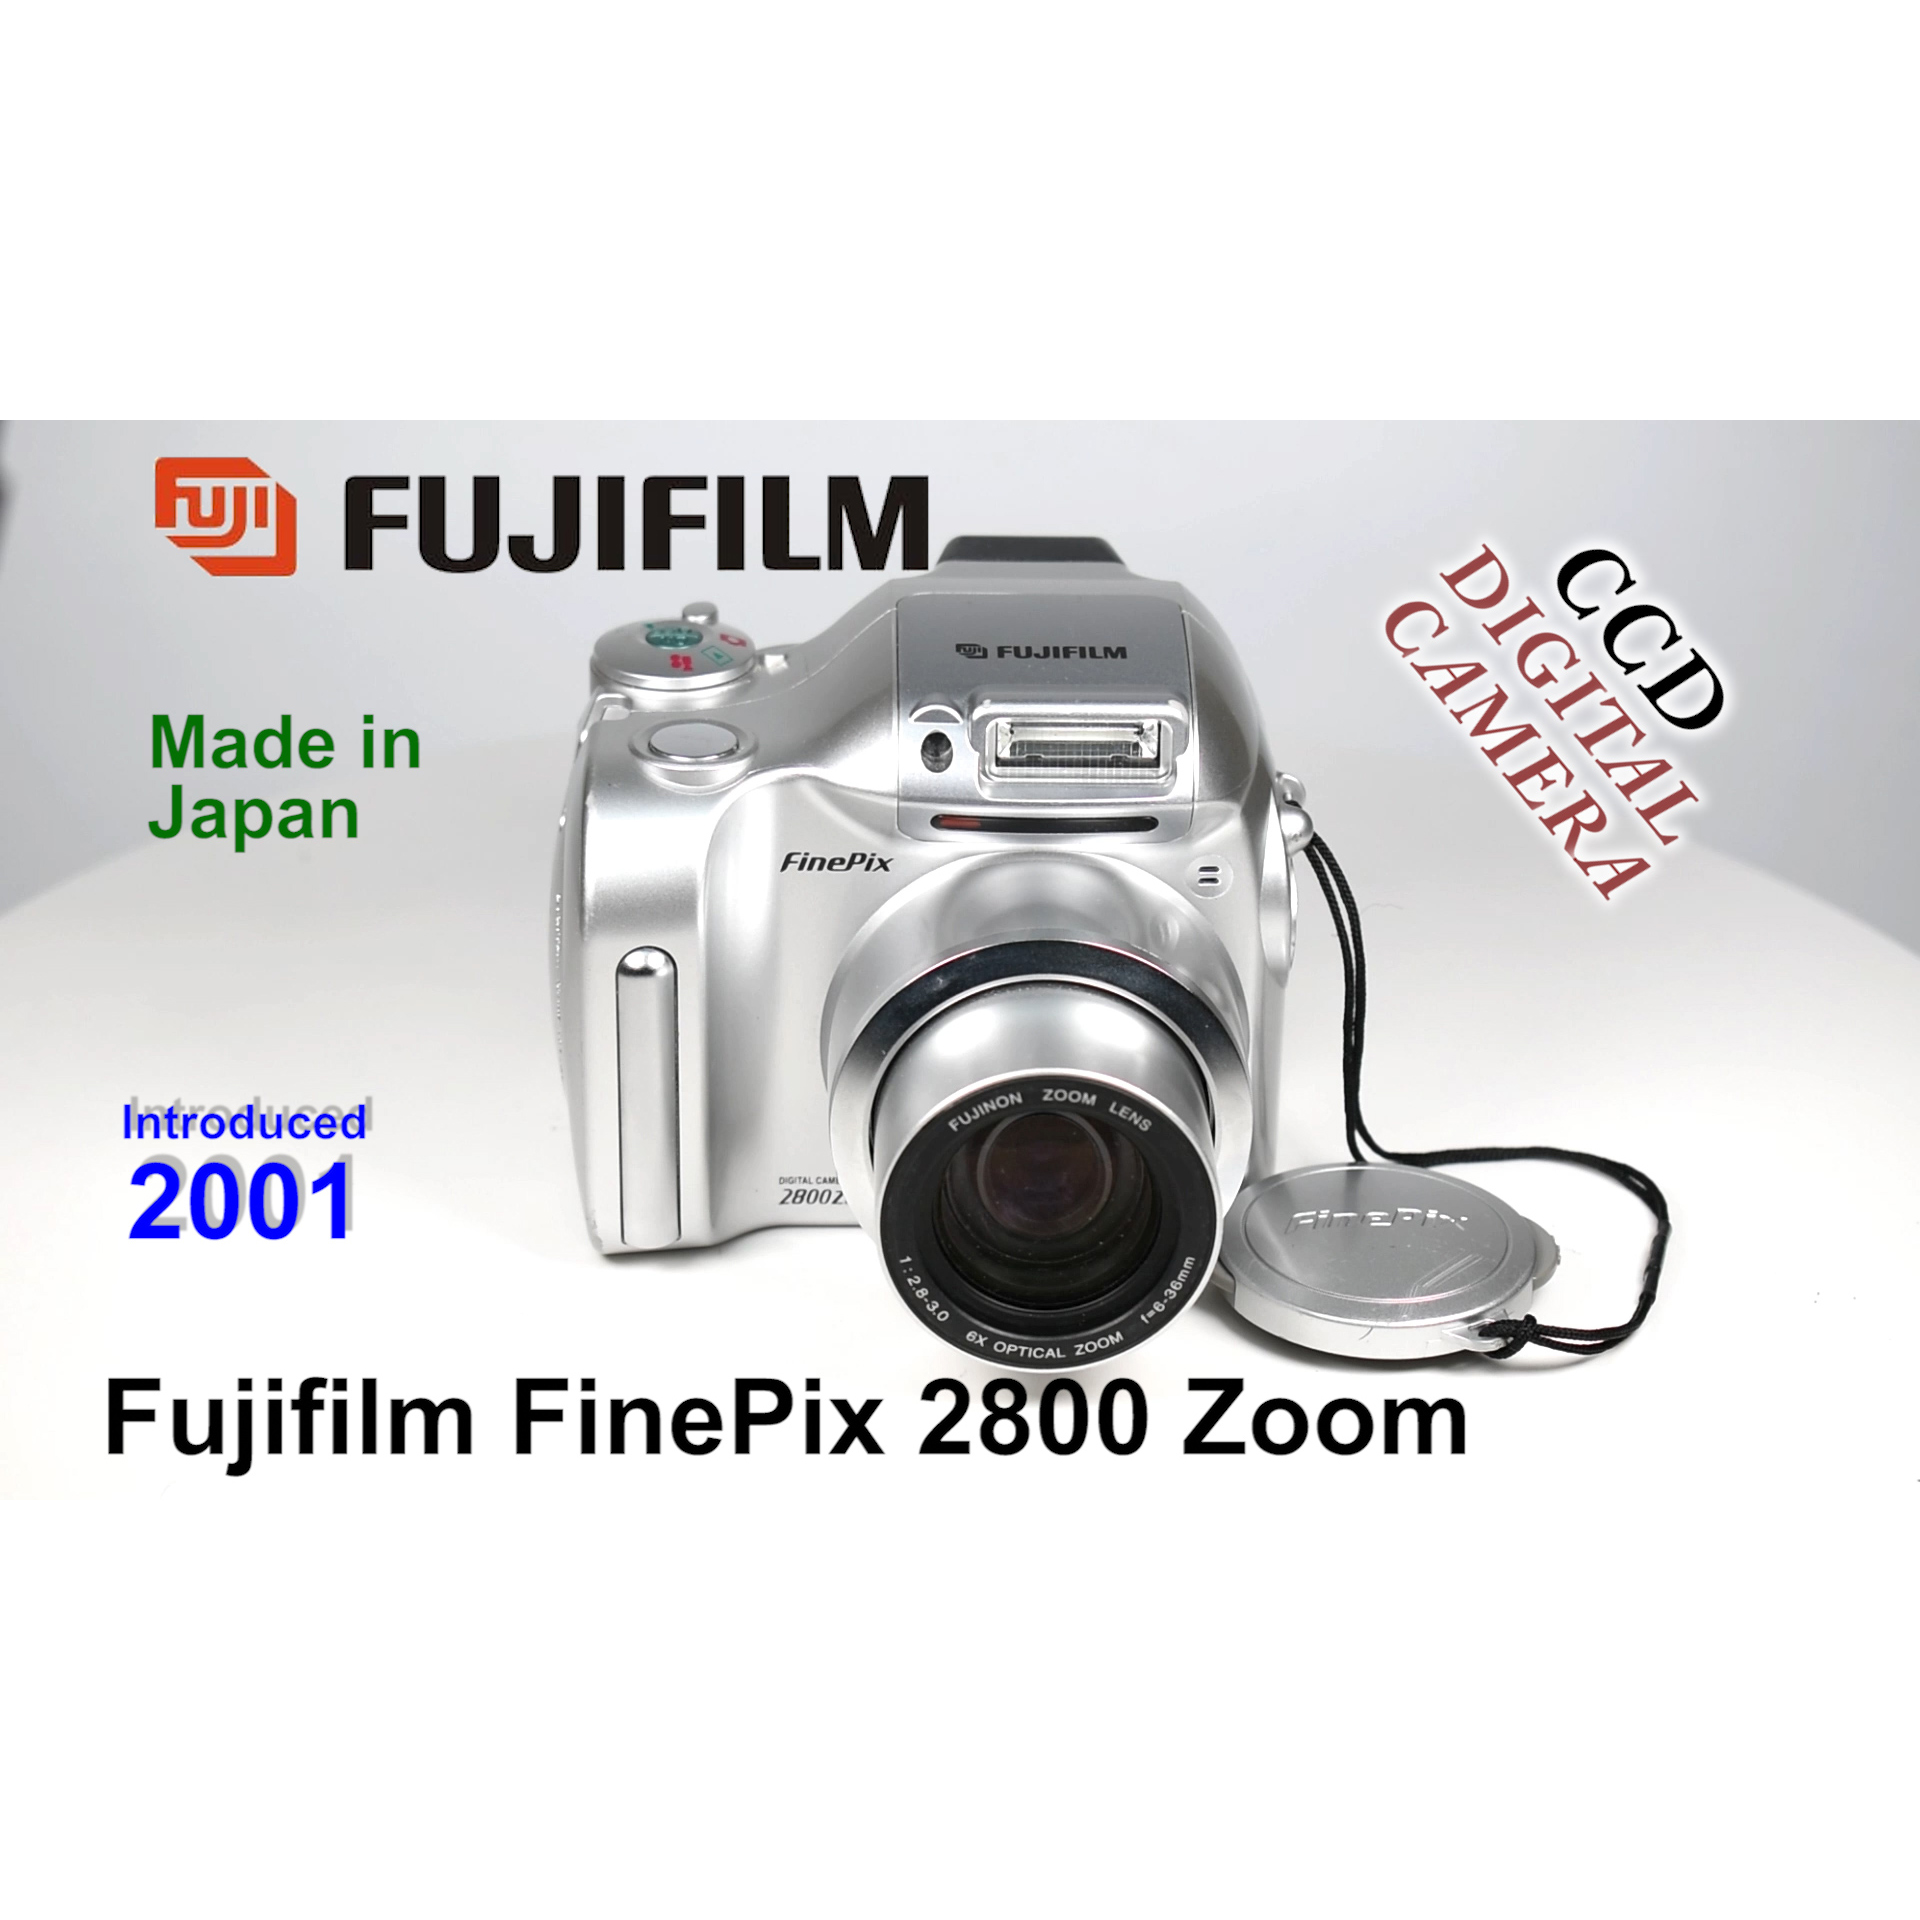 2001 Fujifilm FinePix 2800 Zoom – CCD Digital Camera